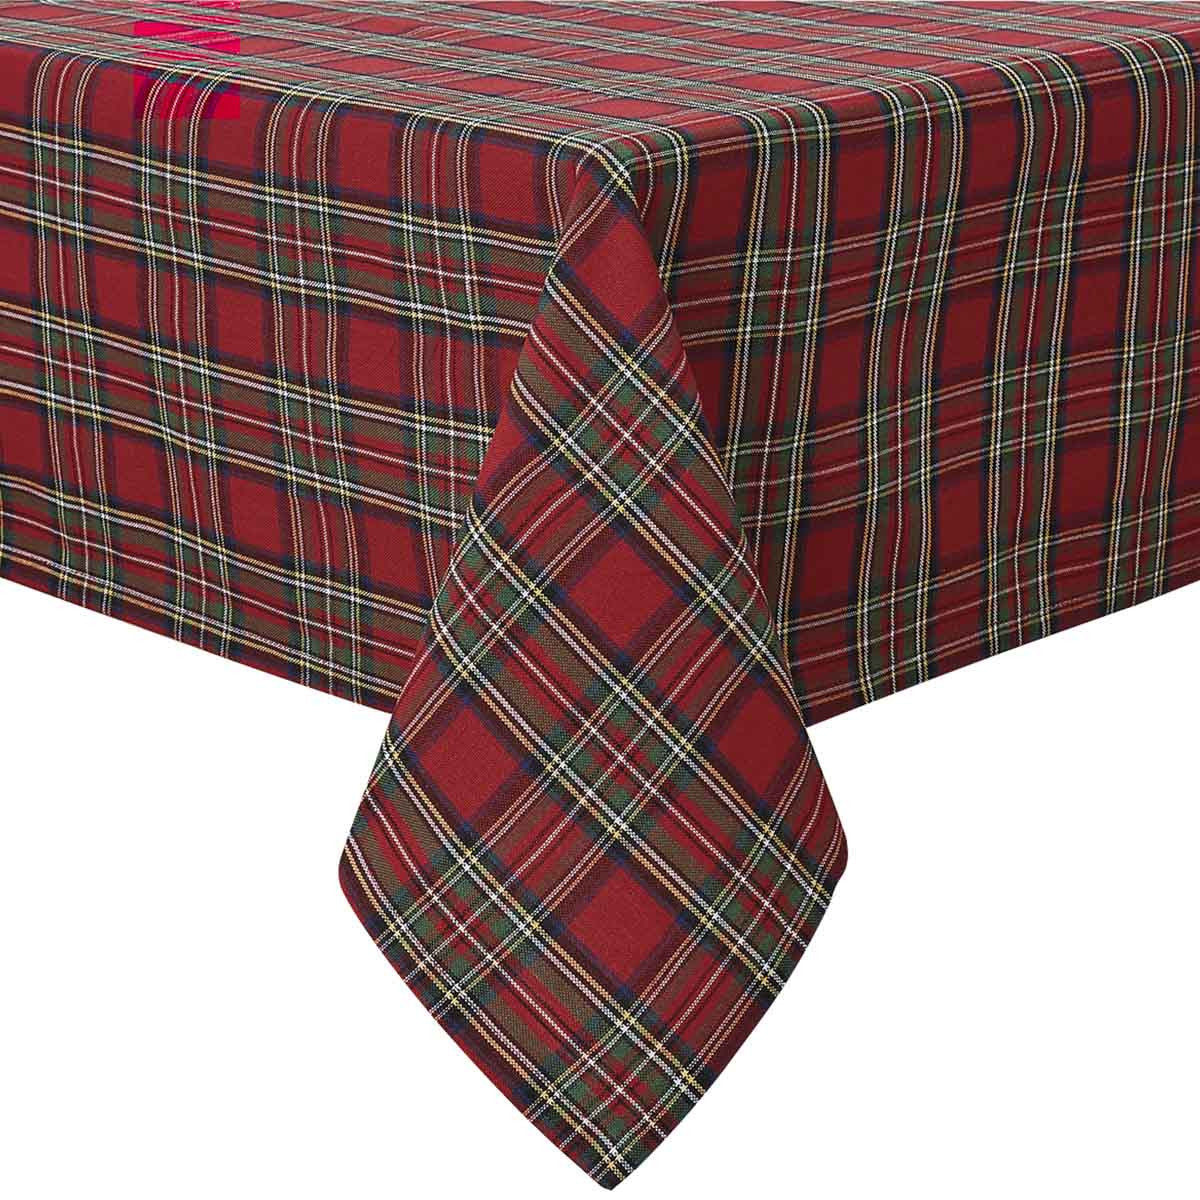 Regal Tartan Tablecloth - 60"x84" - Park Designs